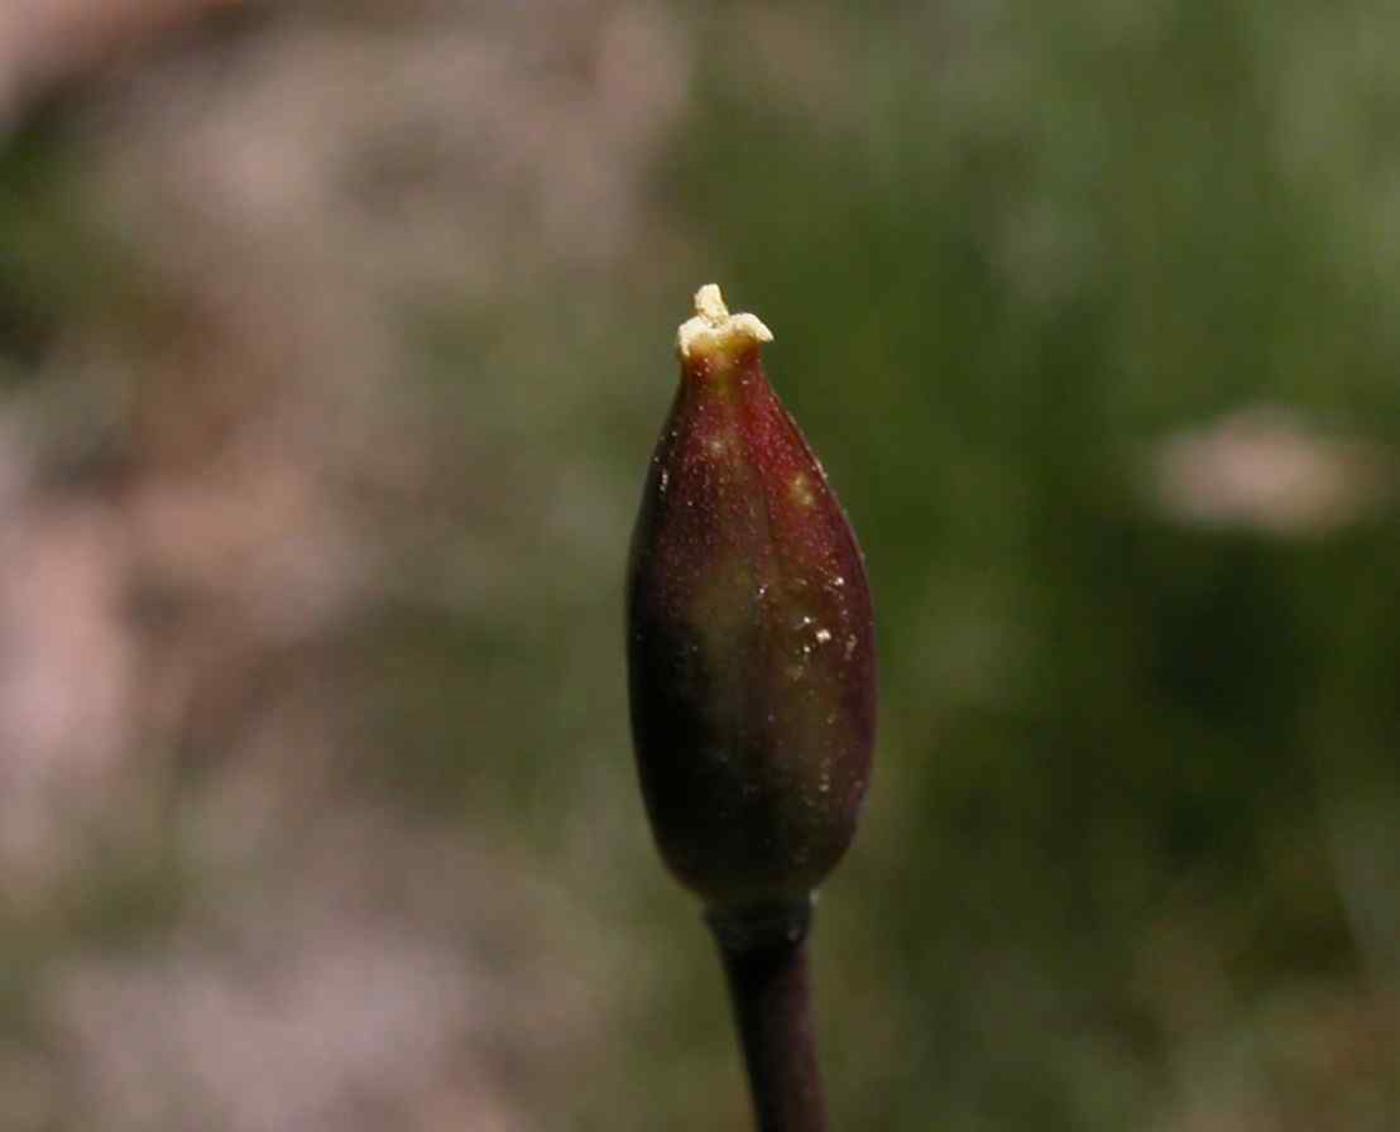 Tulip, Southern Wild fruit